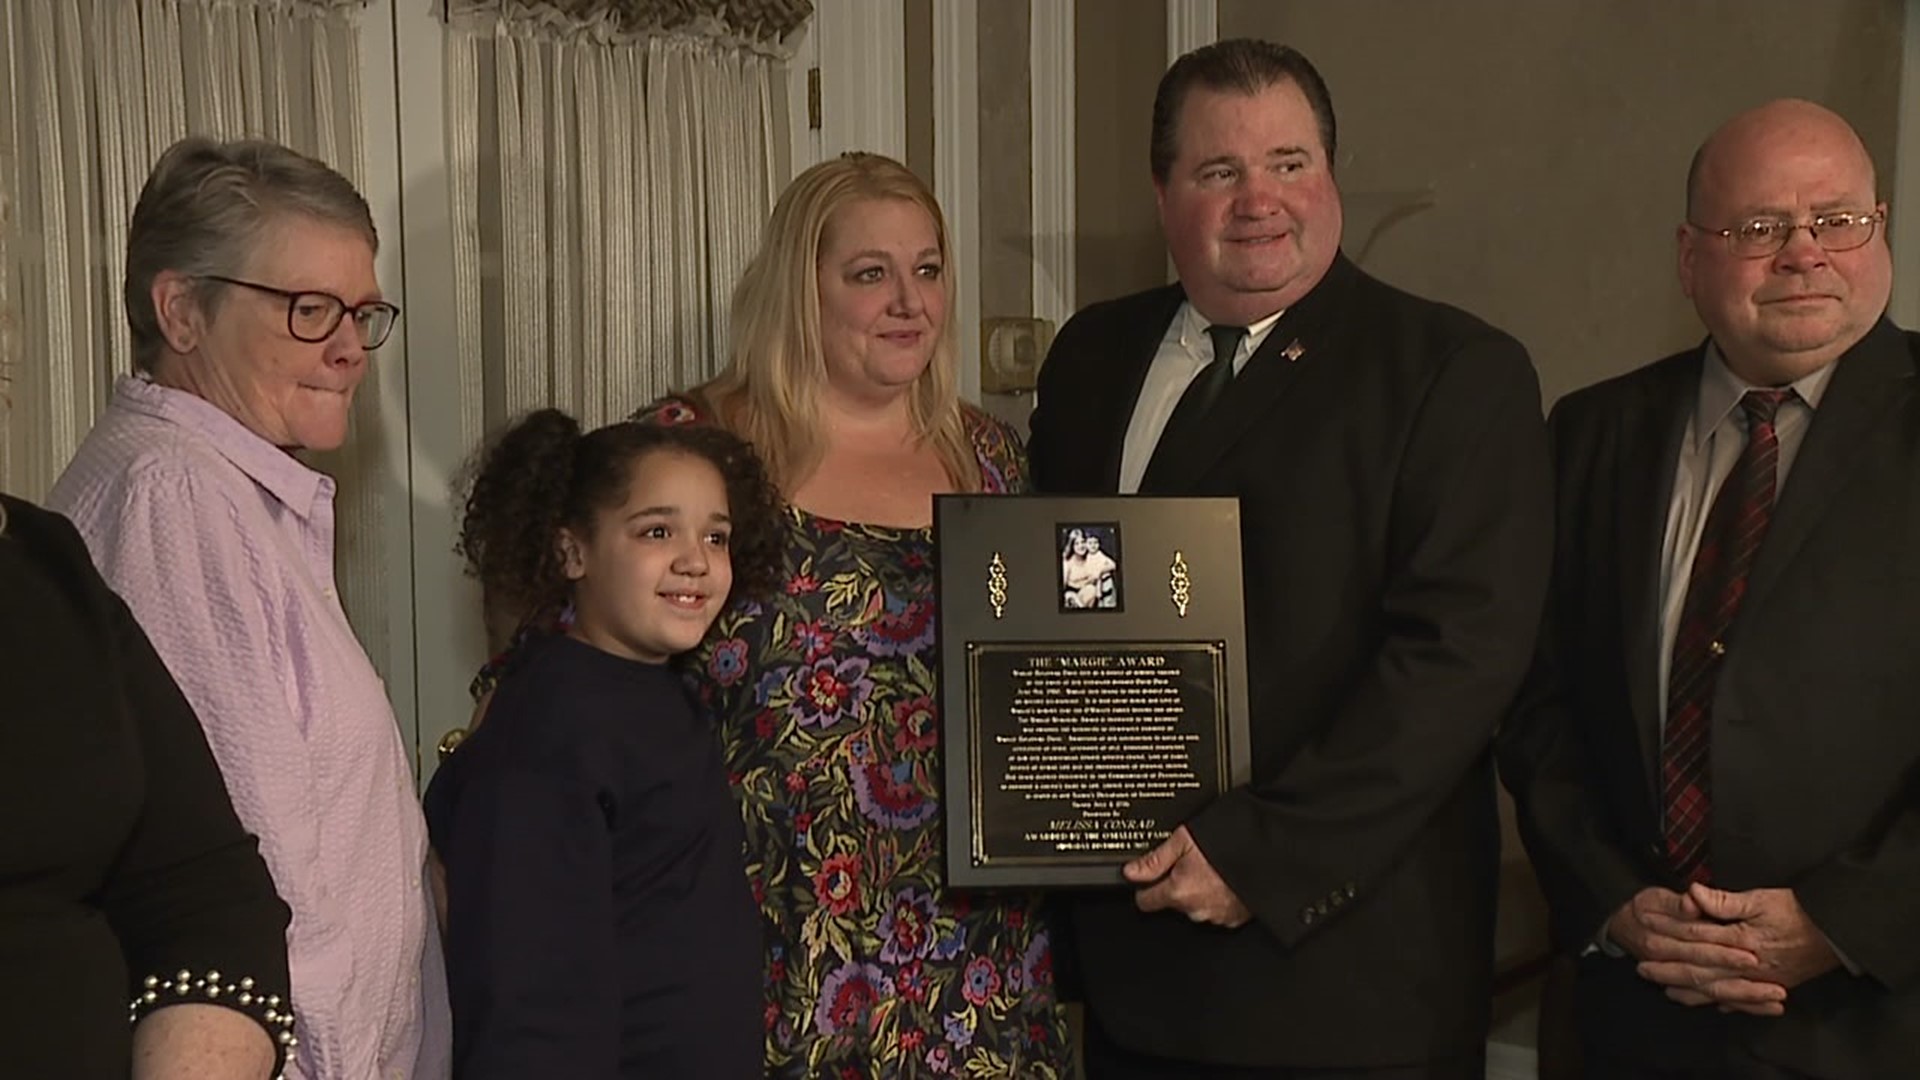 Melissa Conrad received the Margie Memorial Award in memory of Margie Holodnak Davis.